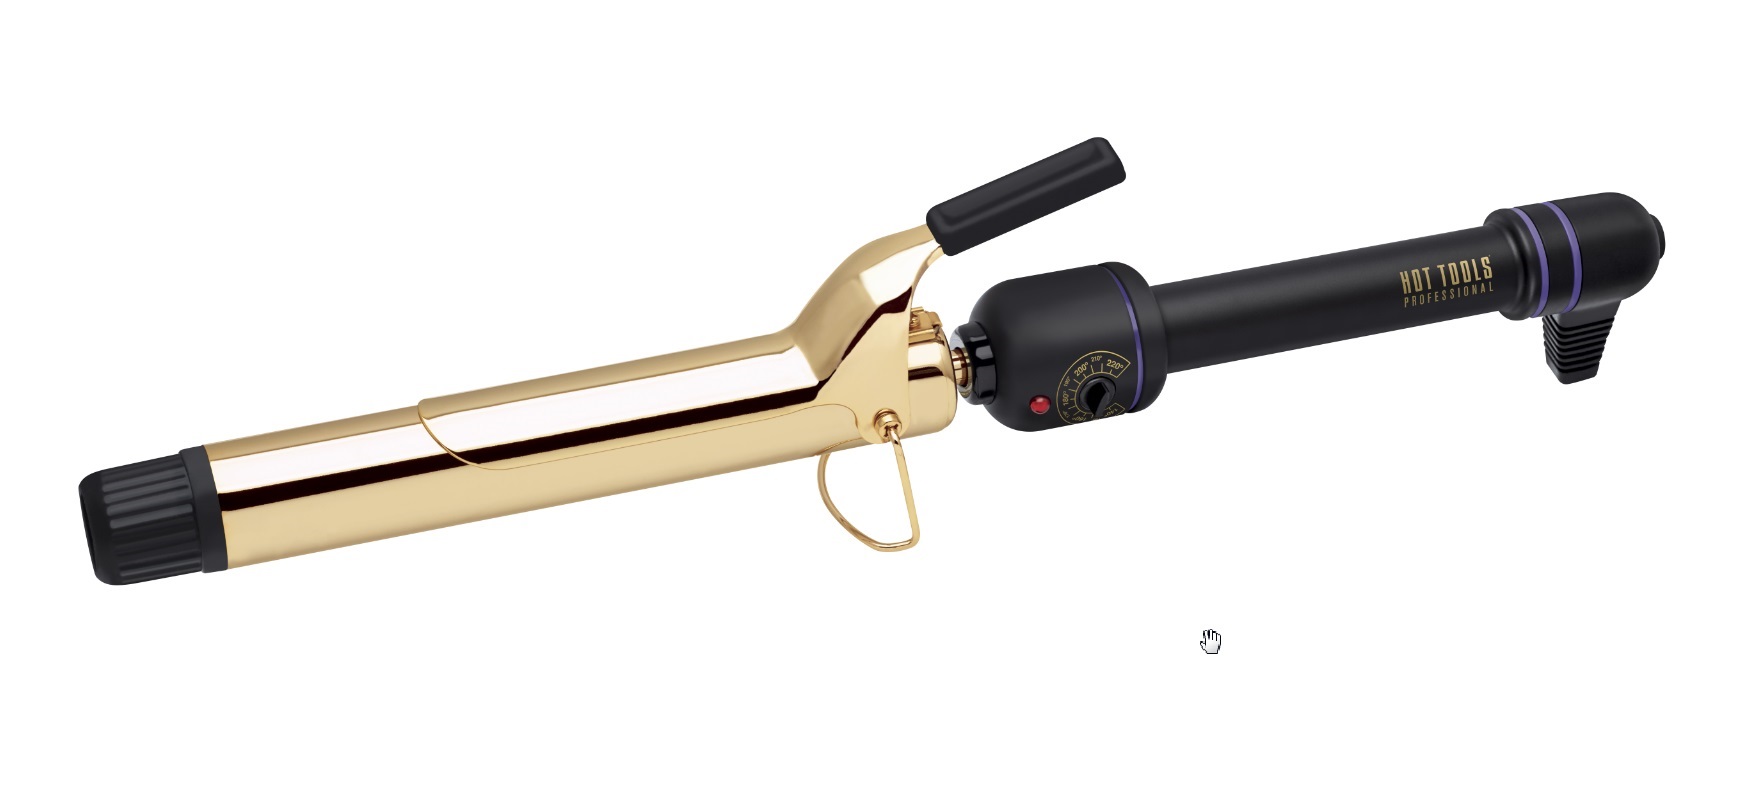 HOT TOOLS PROFESSIONAL Стайлер 24K Gold Extra Long Salon Curling Iron 32 мм